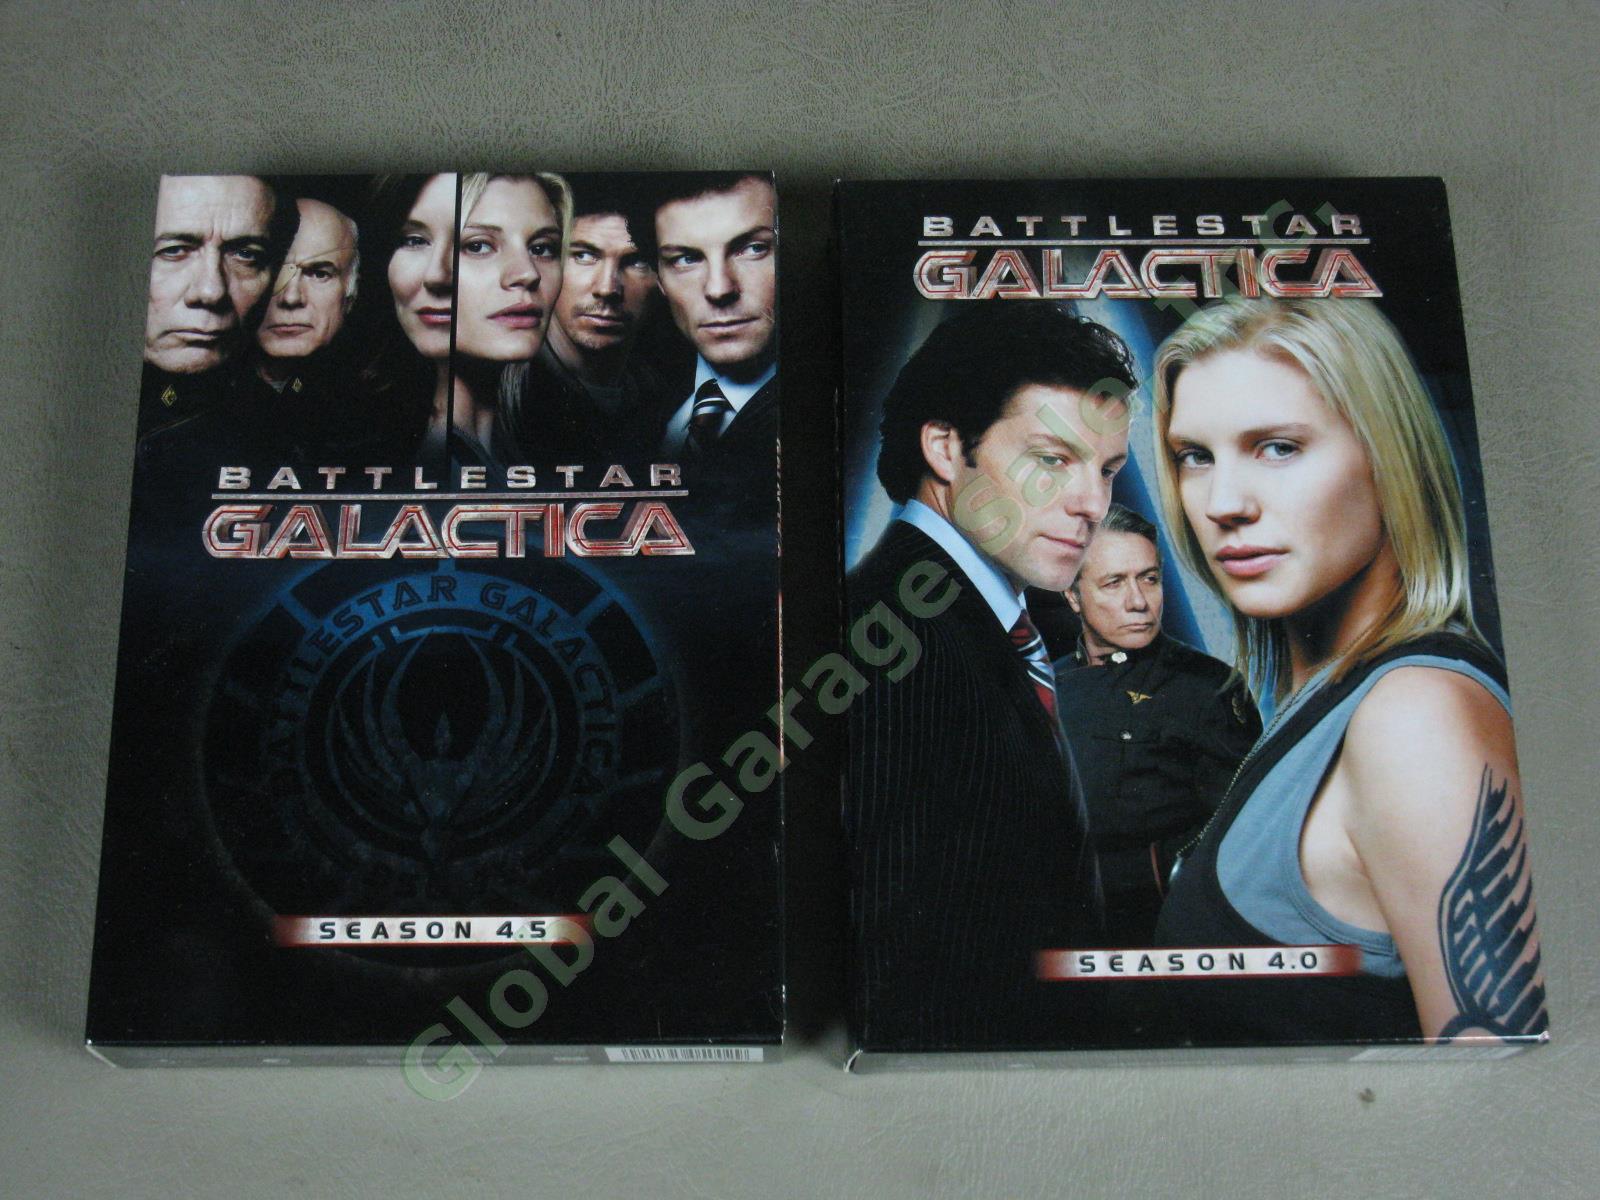 72-DVD Sci-Fi TV Lot Complete Twilight Zone Flash Gordon Battlestar Galactica ++ 8